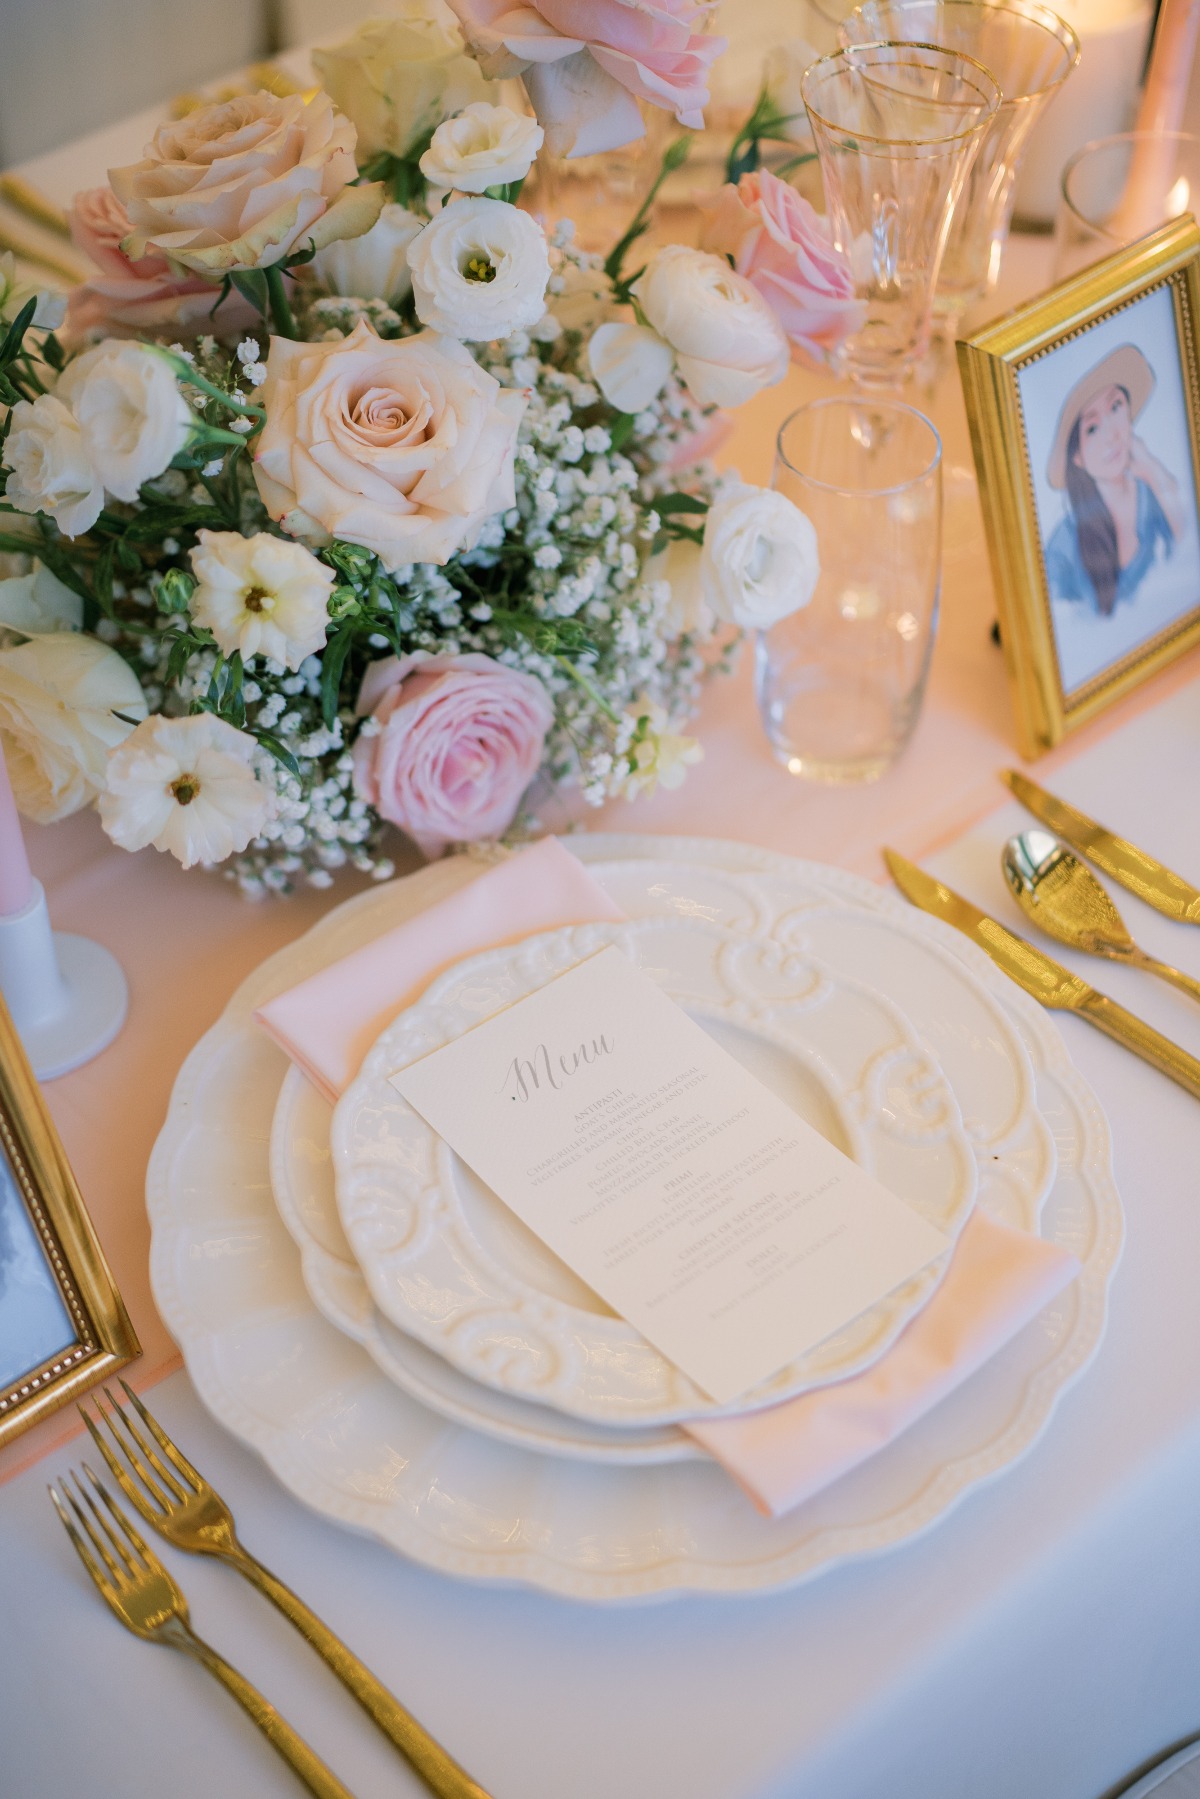 Elegant textured wedding plates